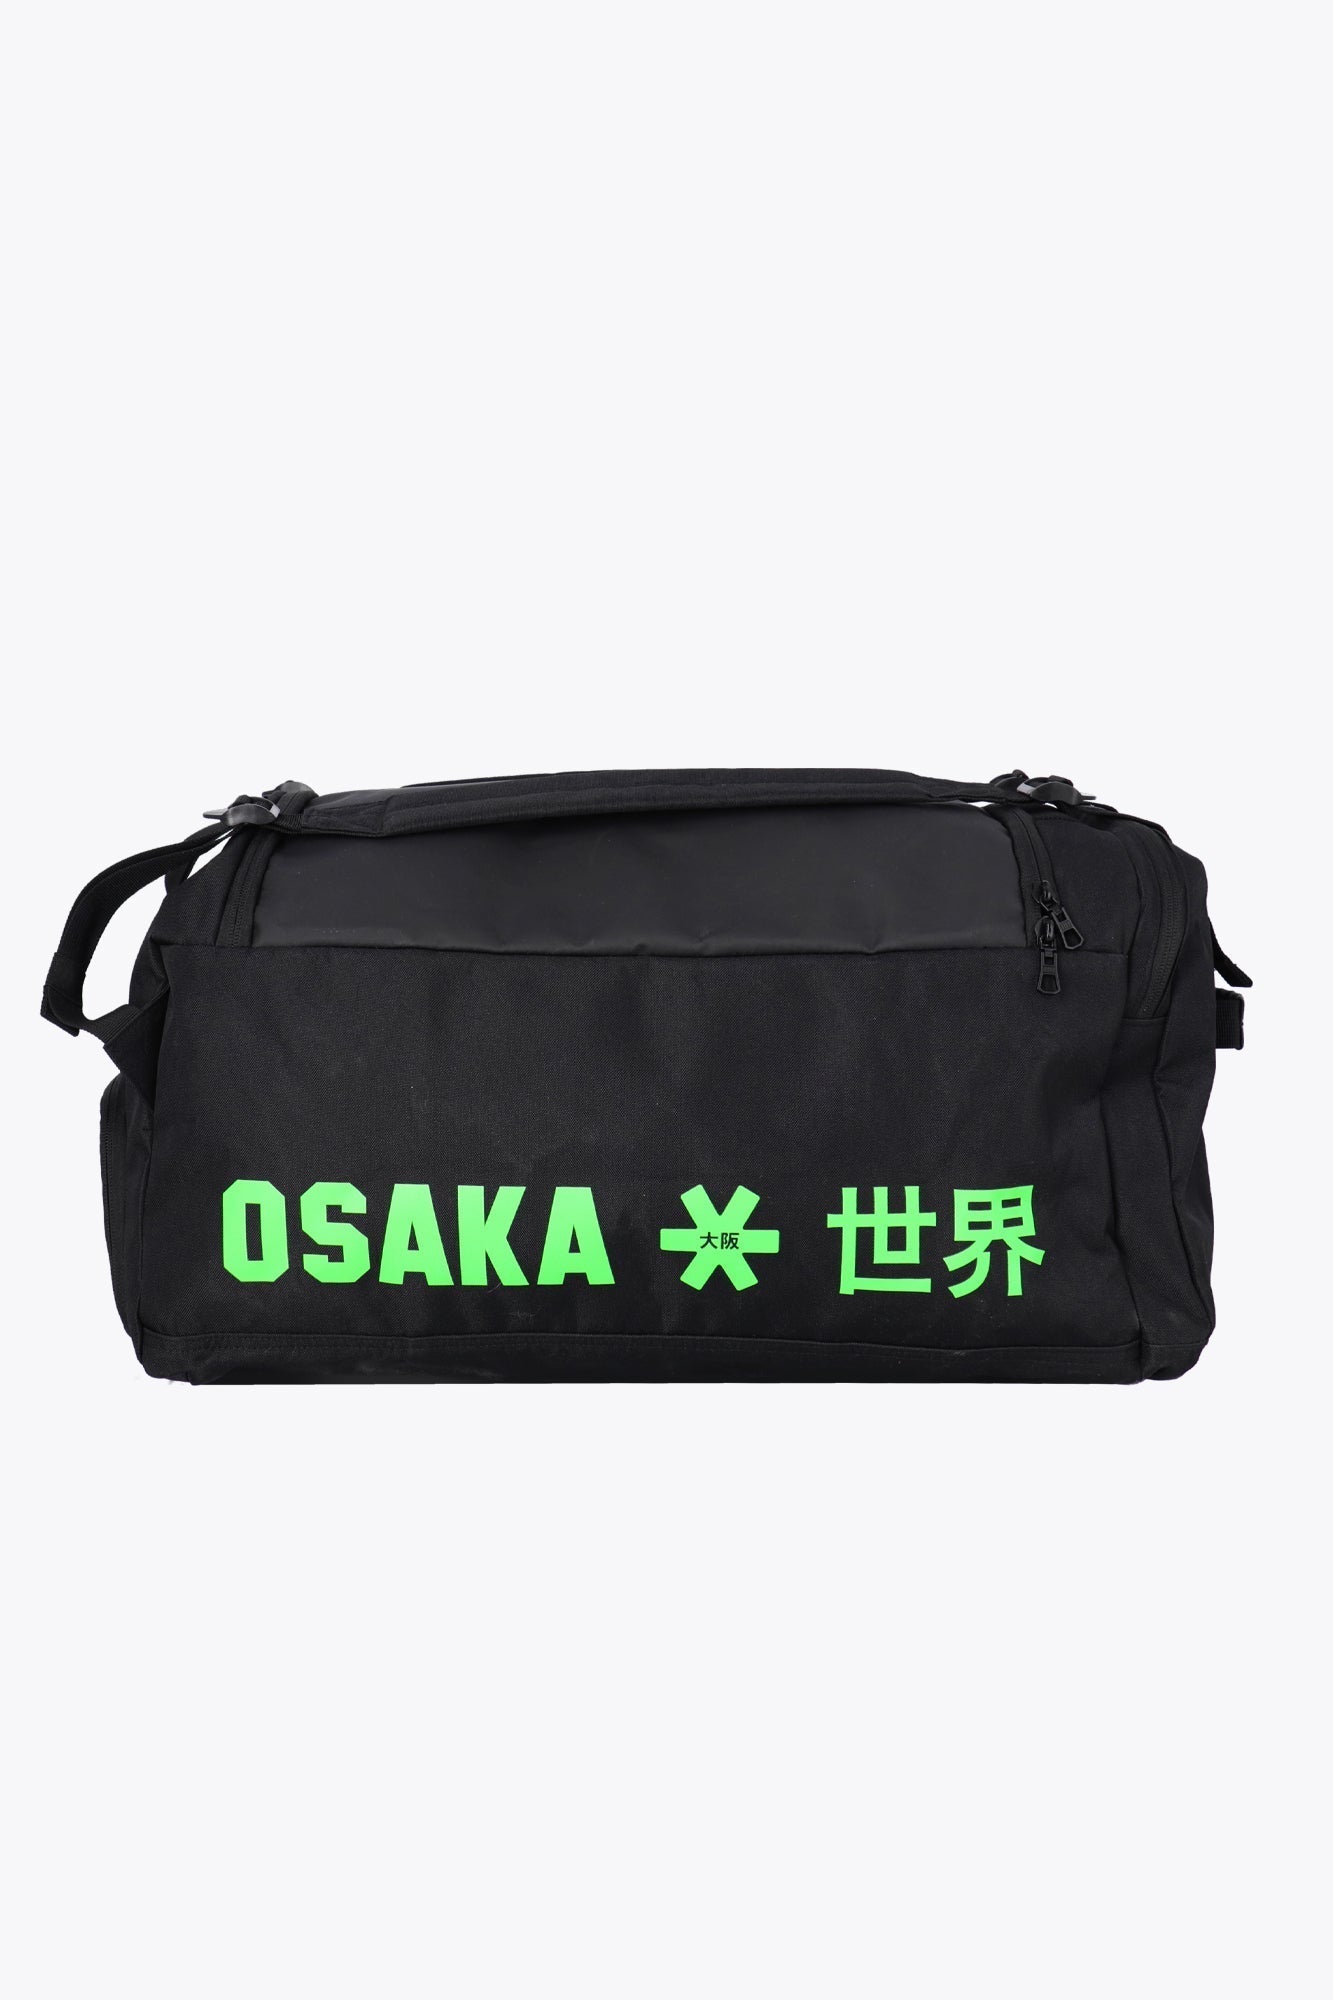 Osaka Sports Duffle Tas (Zwart/Groen)